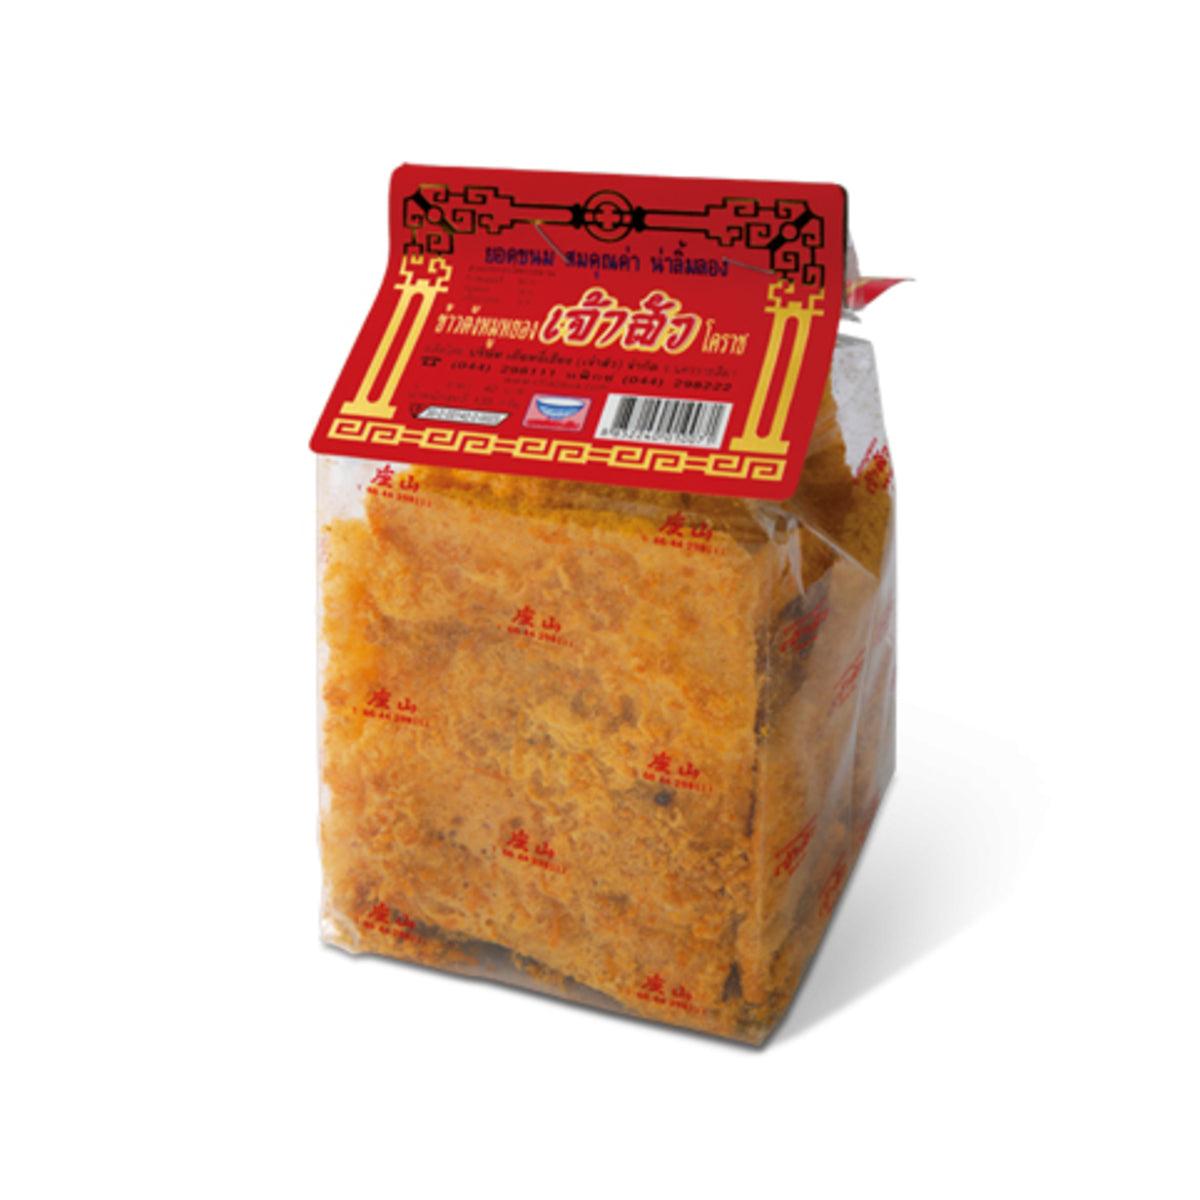 CHAO SUA Rice Cracker with Flossy Pork 115G 座山 原味肉鬆飯焦乾 115G